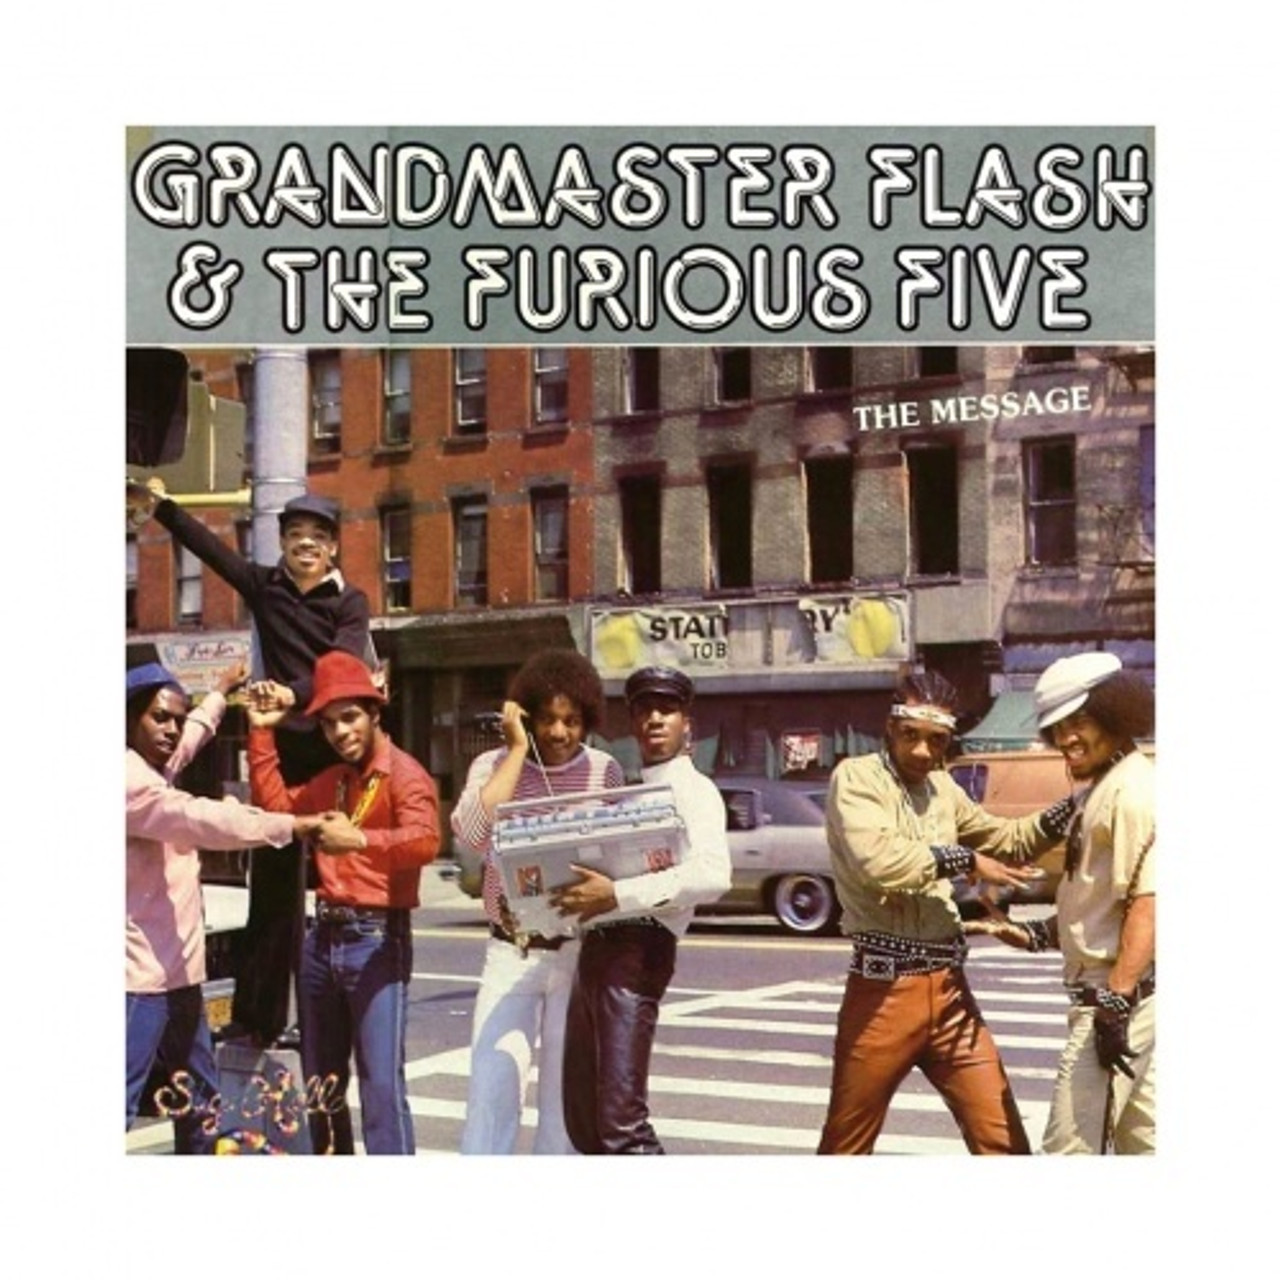 Artist: Grandmaster Flash & The Furious Five